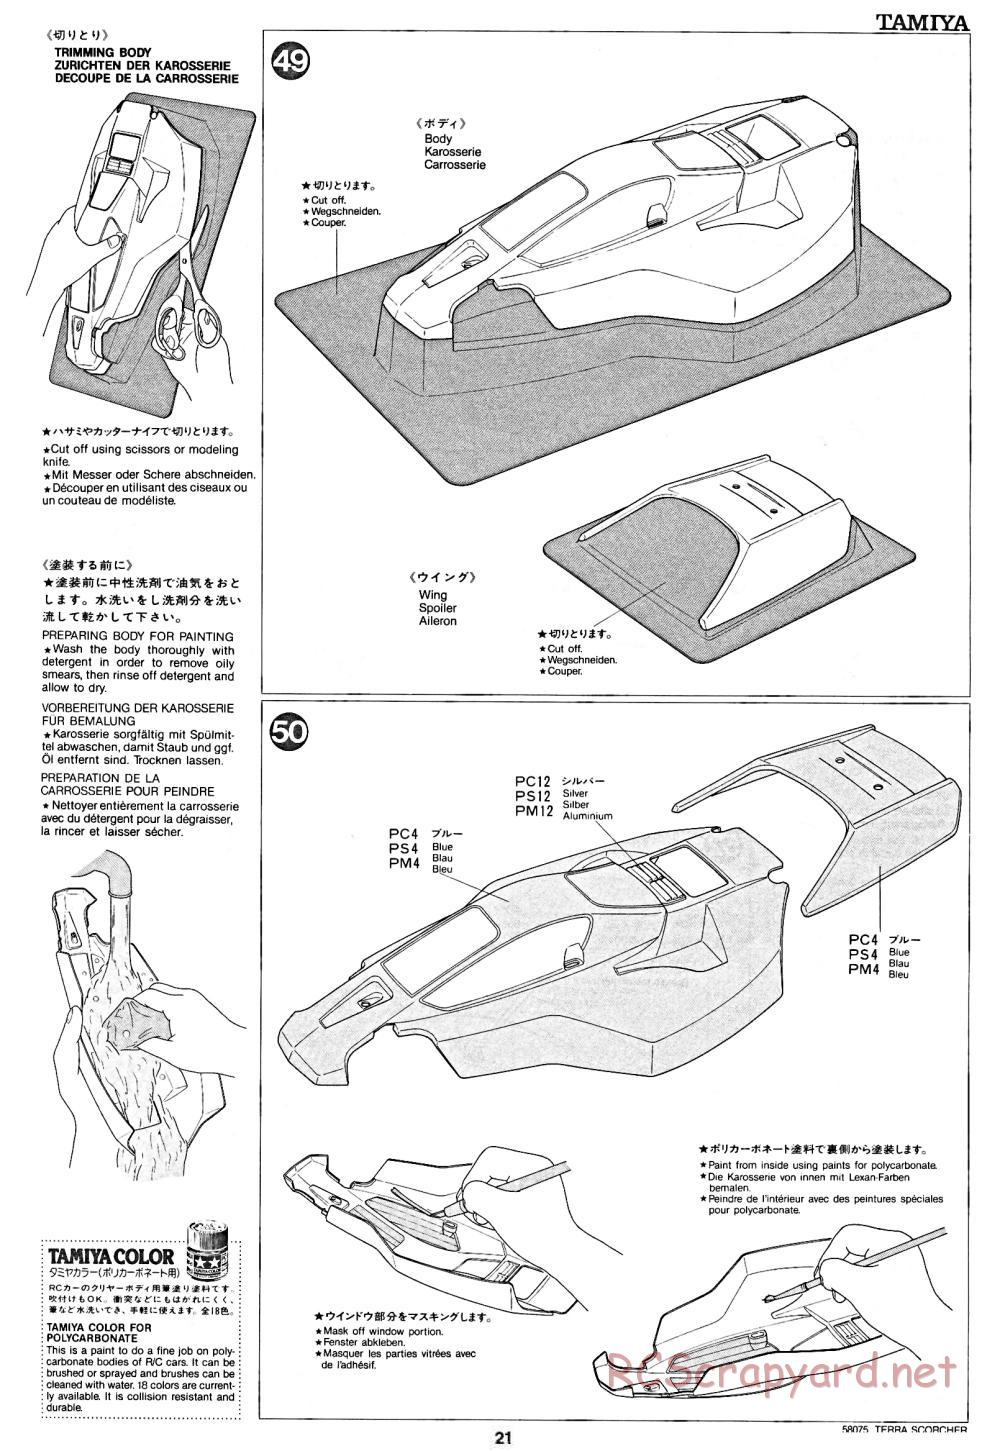 Tamiya - Terra Scorcher - 58075 - Manual - Page 21